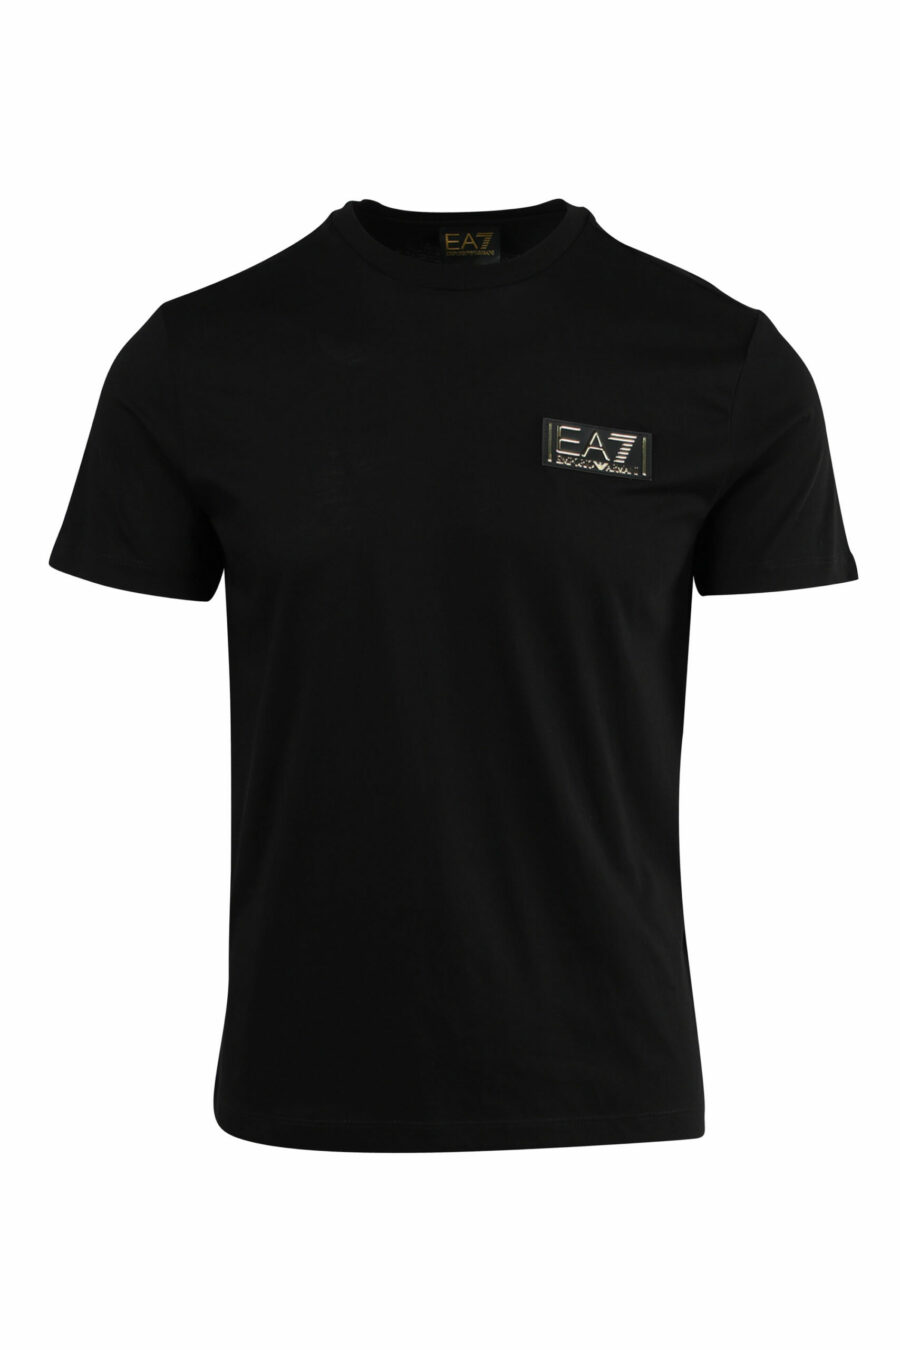 Schwarzes T-Shirt mit goldenem "lux identity"-Mini-Logo - 8057767515805 skaliert